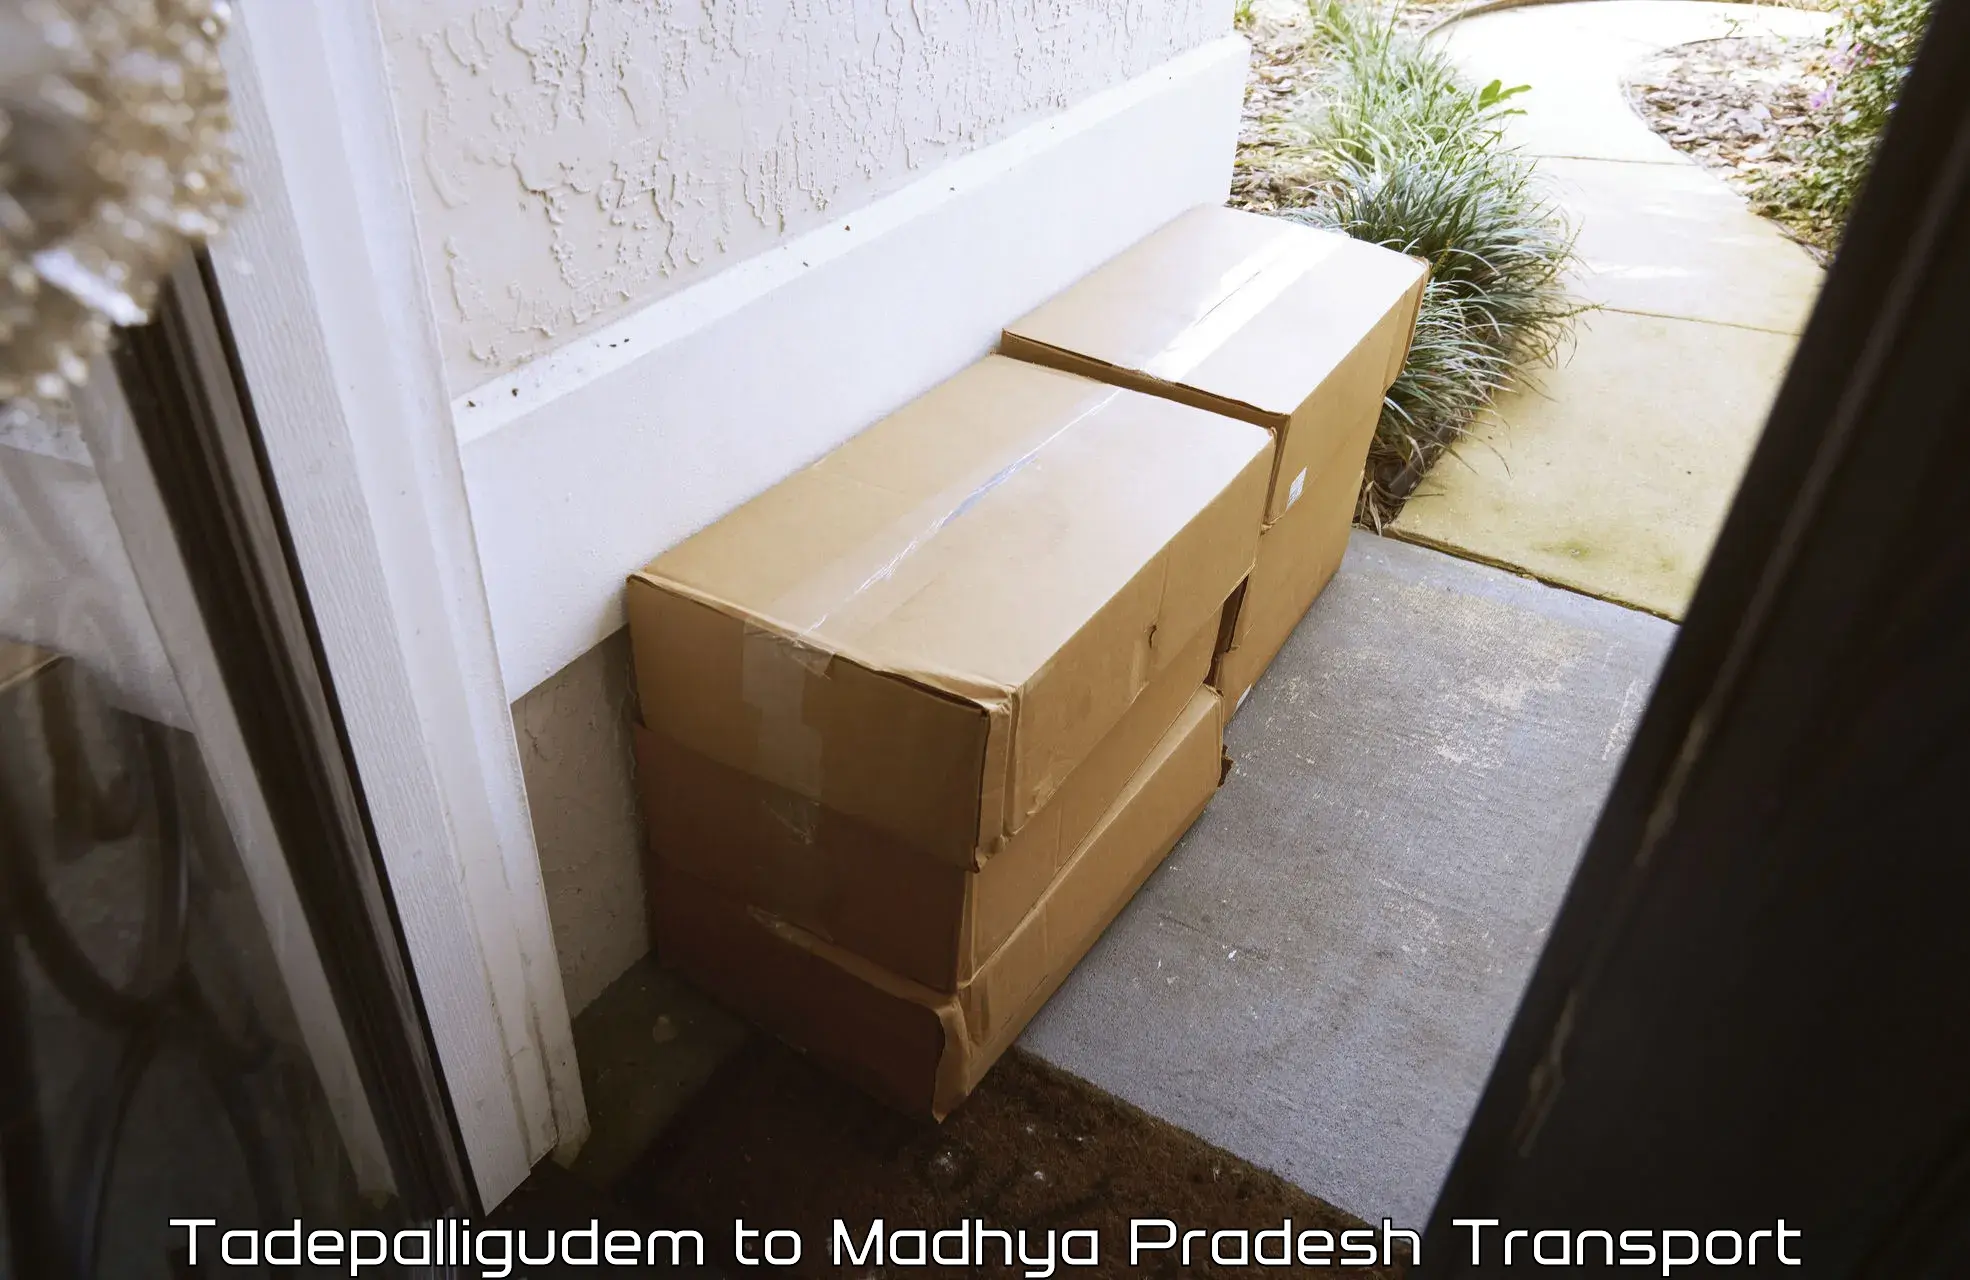 Delivery service Tadepalligudem to Udaipura